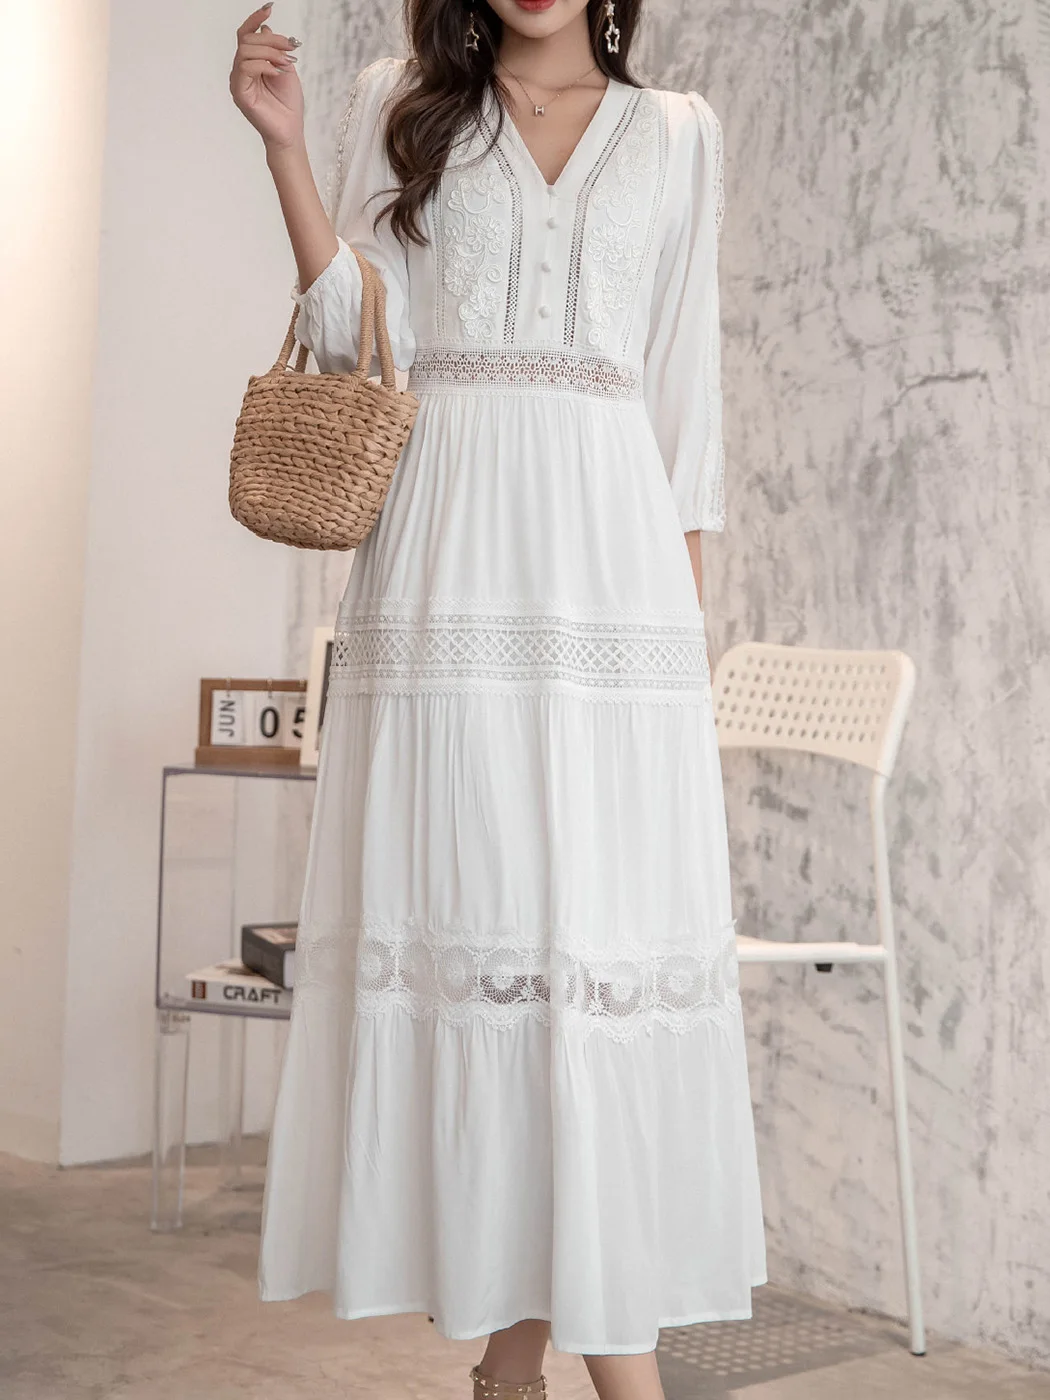 jastie boho elegant white chic dress